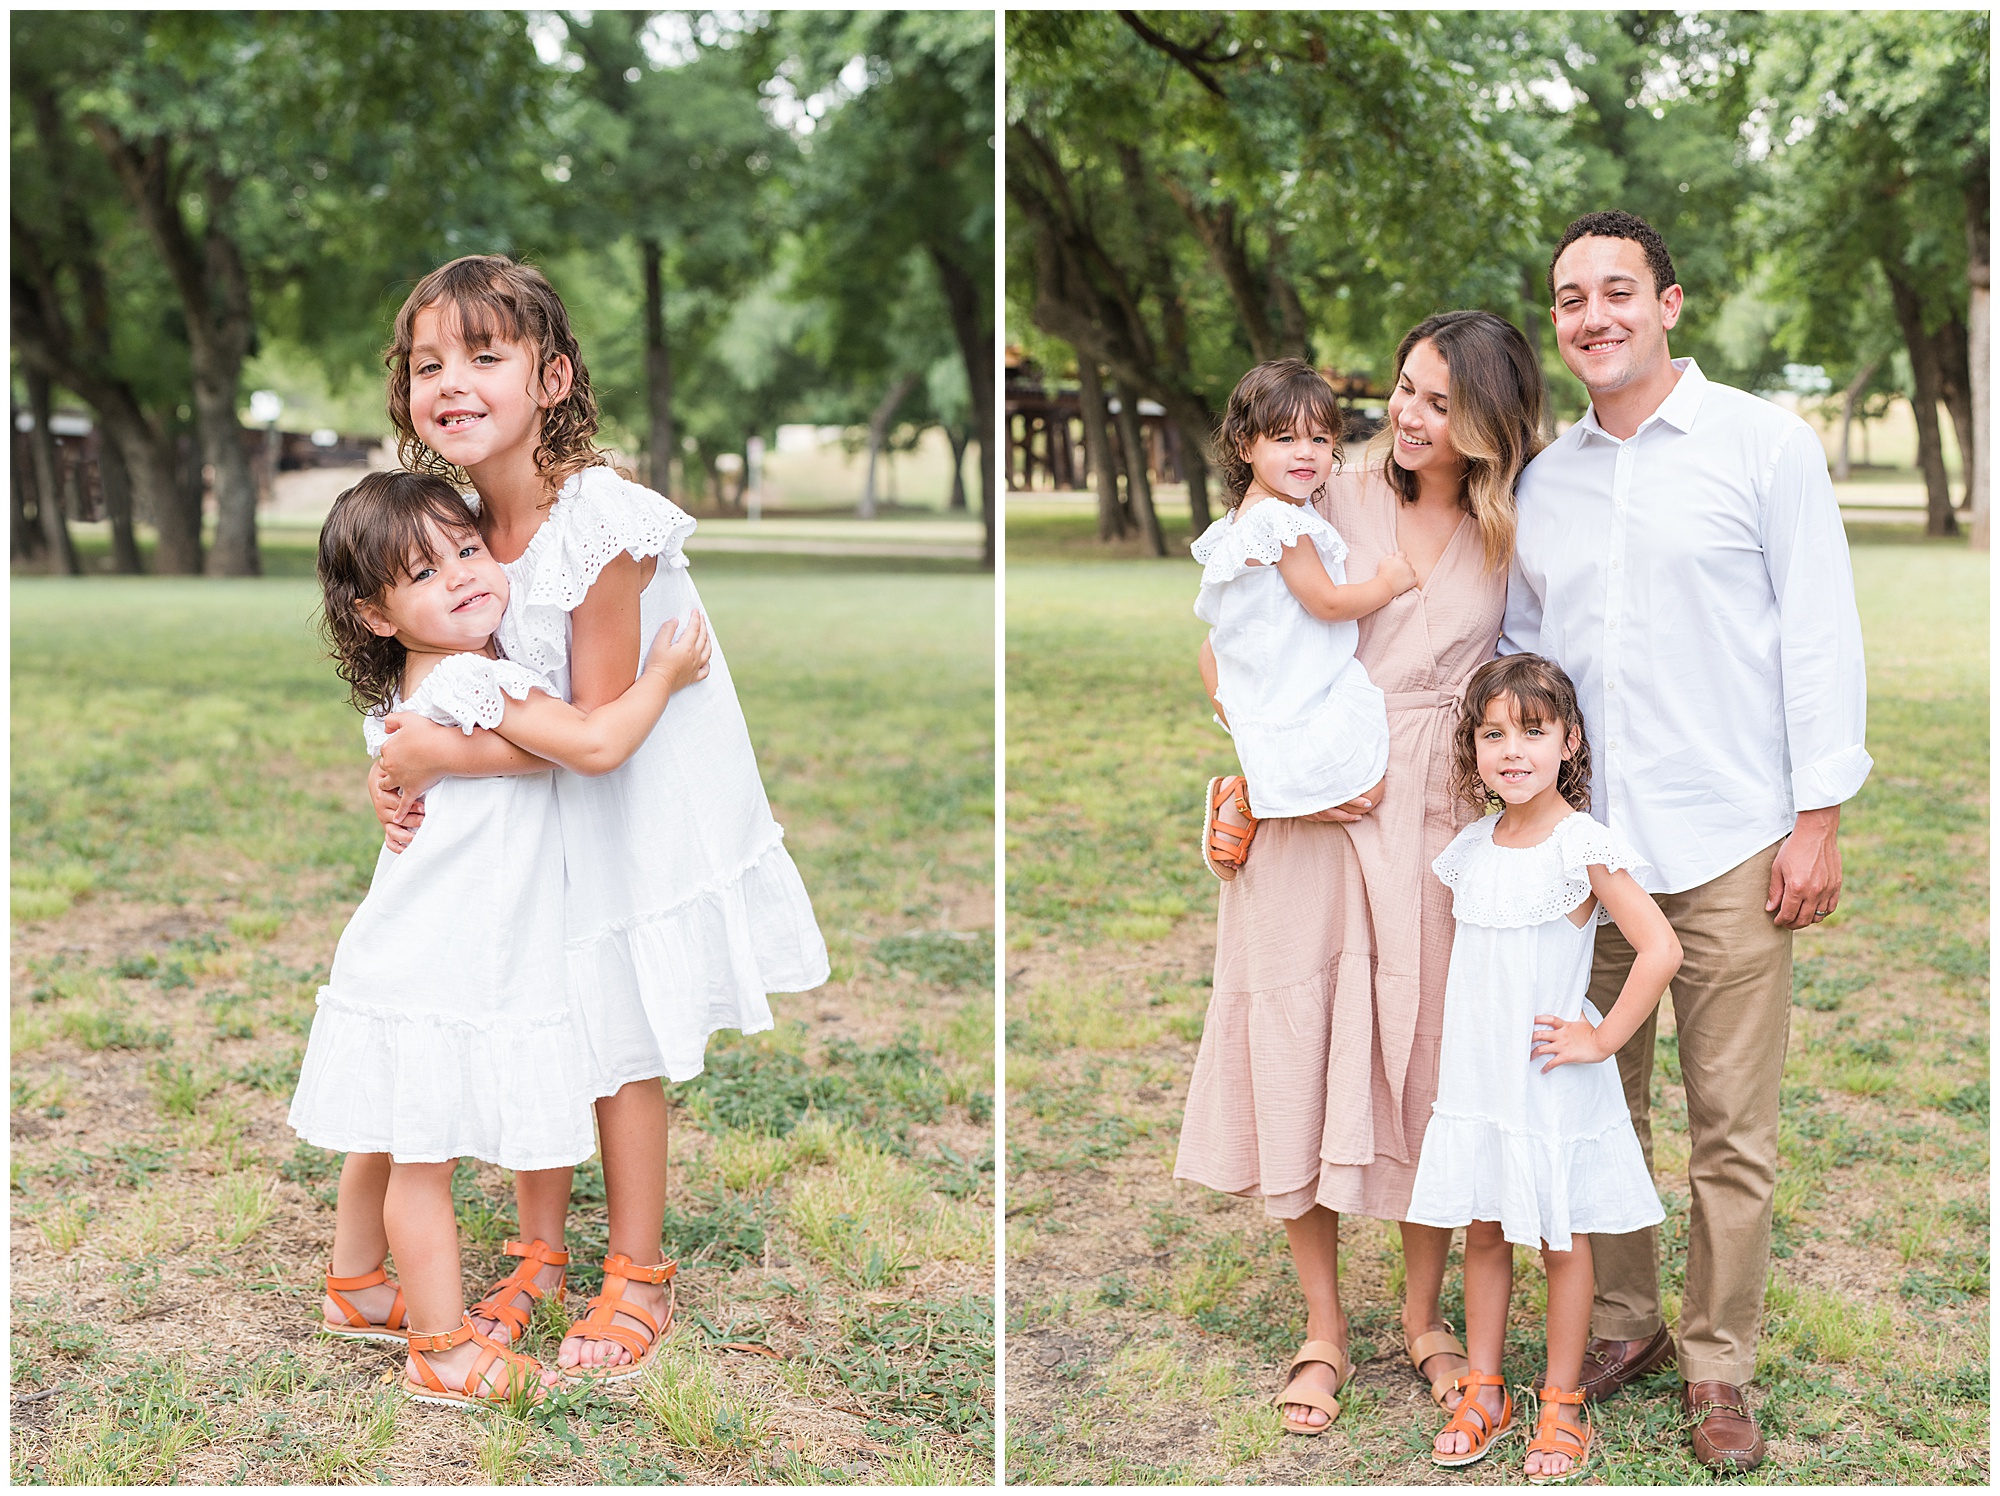 2019 Fort Worth Family Photographer  | Trinity Park, Fort Worth, Texas | Lauren Grimes Photography | Fort Worth Photographer